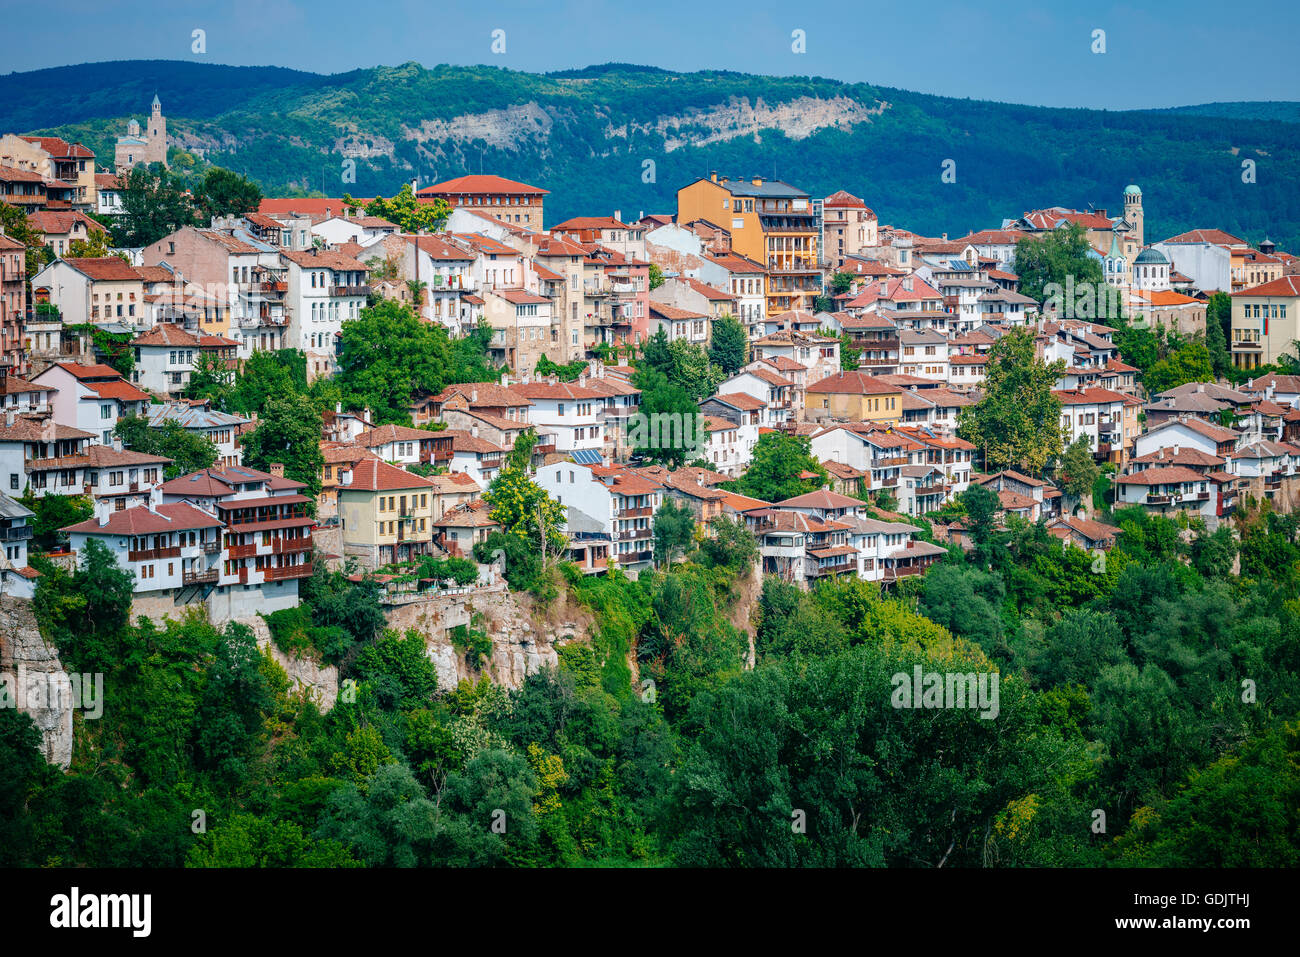 View of Veliko Tarnovo, a city in north central Bulgaria Stock Photo